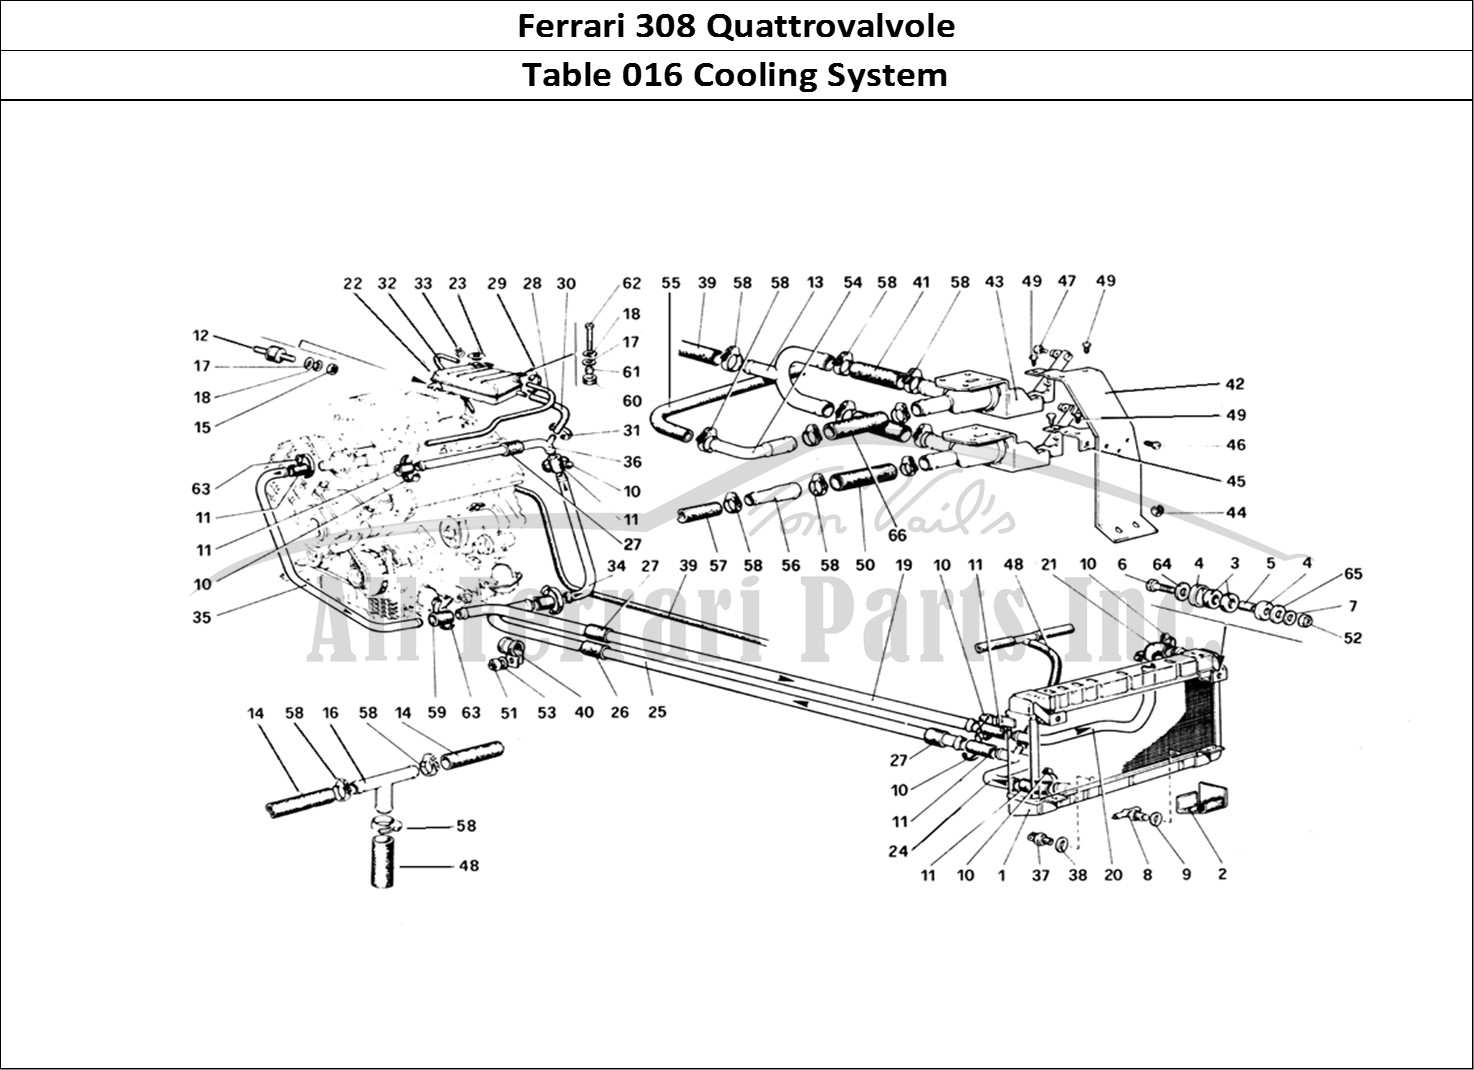 Ferrari Parts Ferrari 308 Quattrovalvole (1985) Page 016 Cooling System